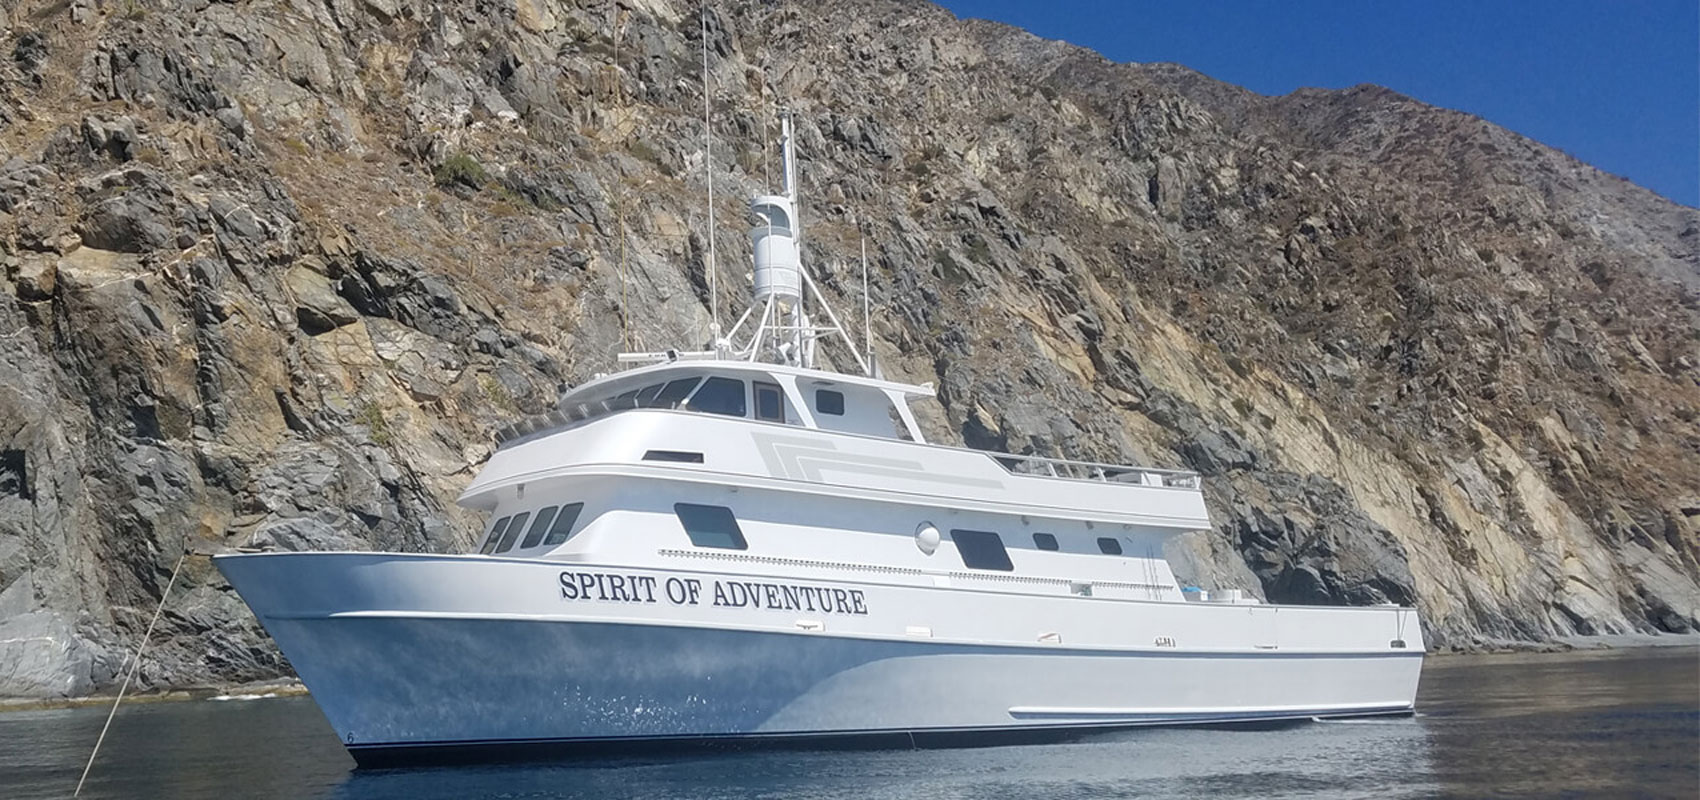 Spirit of Adventure Boat, View 1